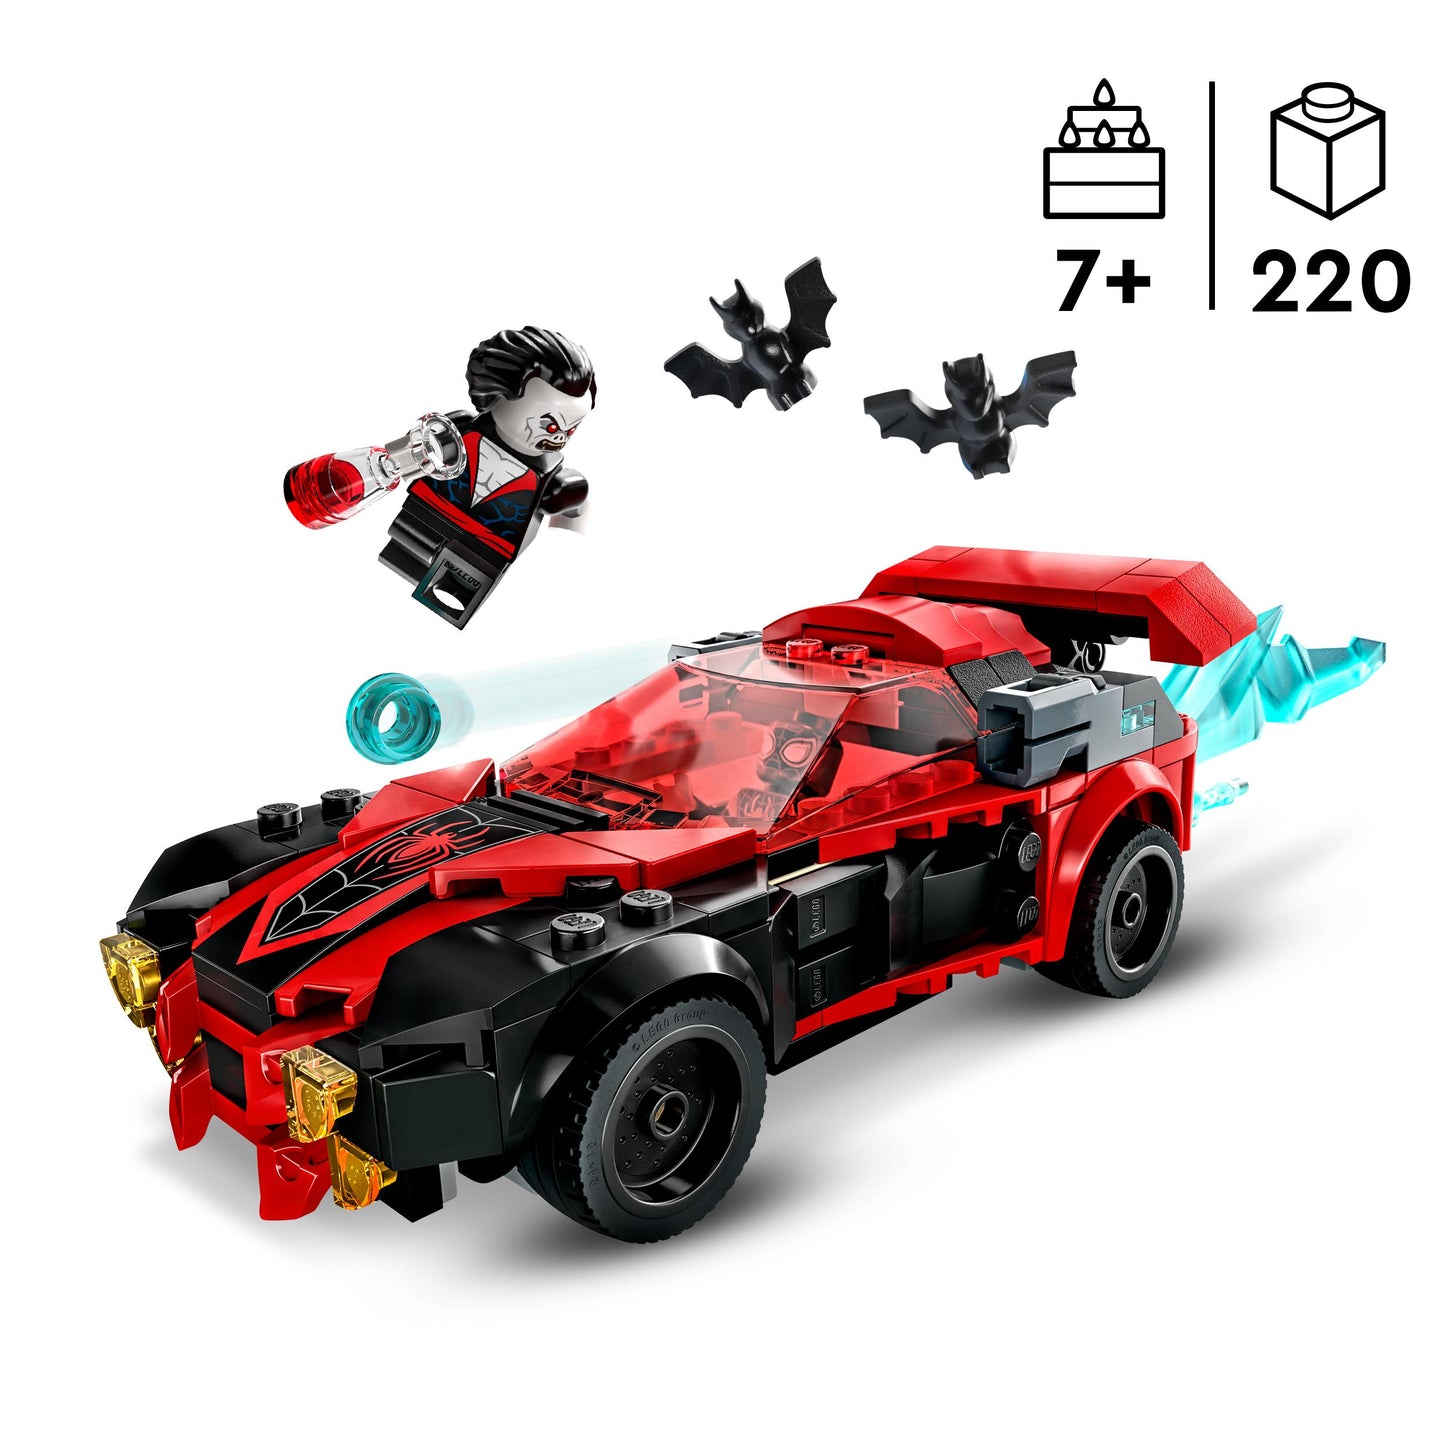 76244 LEGO Marvel Super Heroes - Miles Morales vs. Morbius